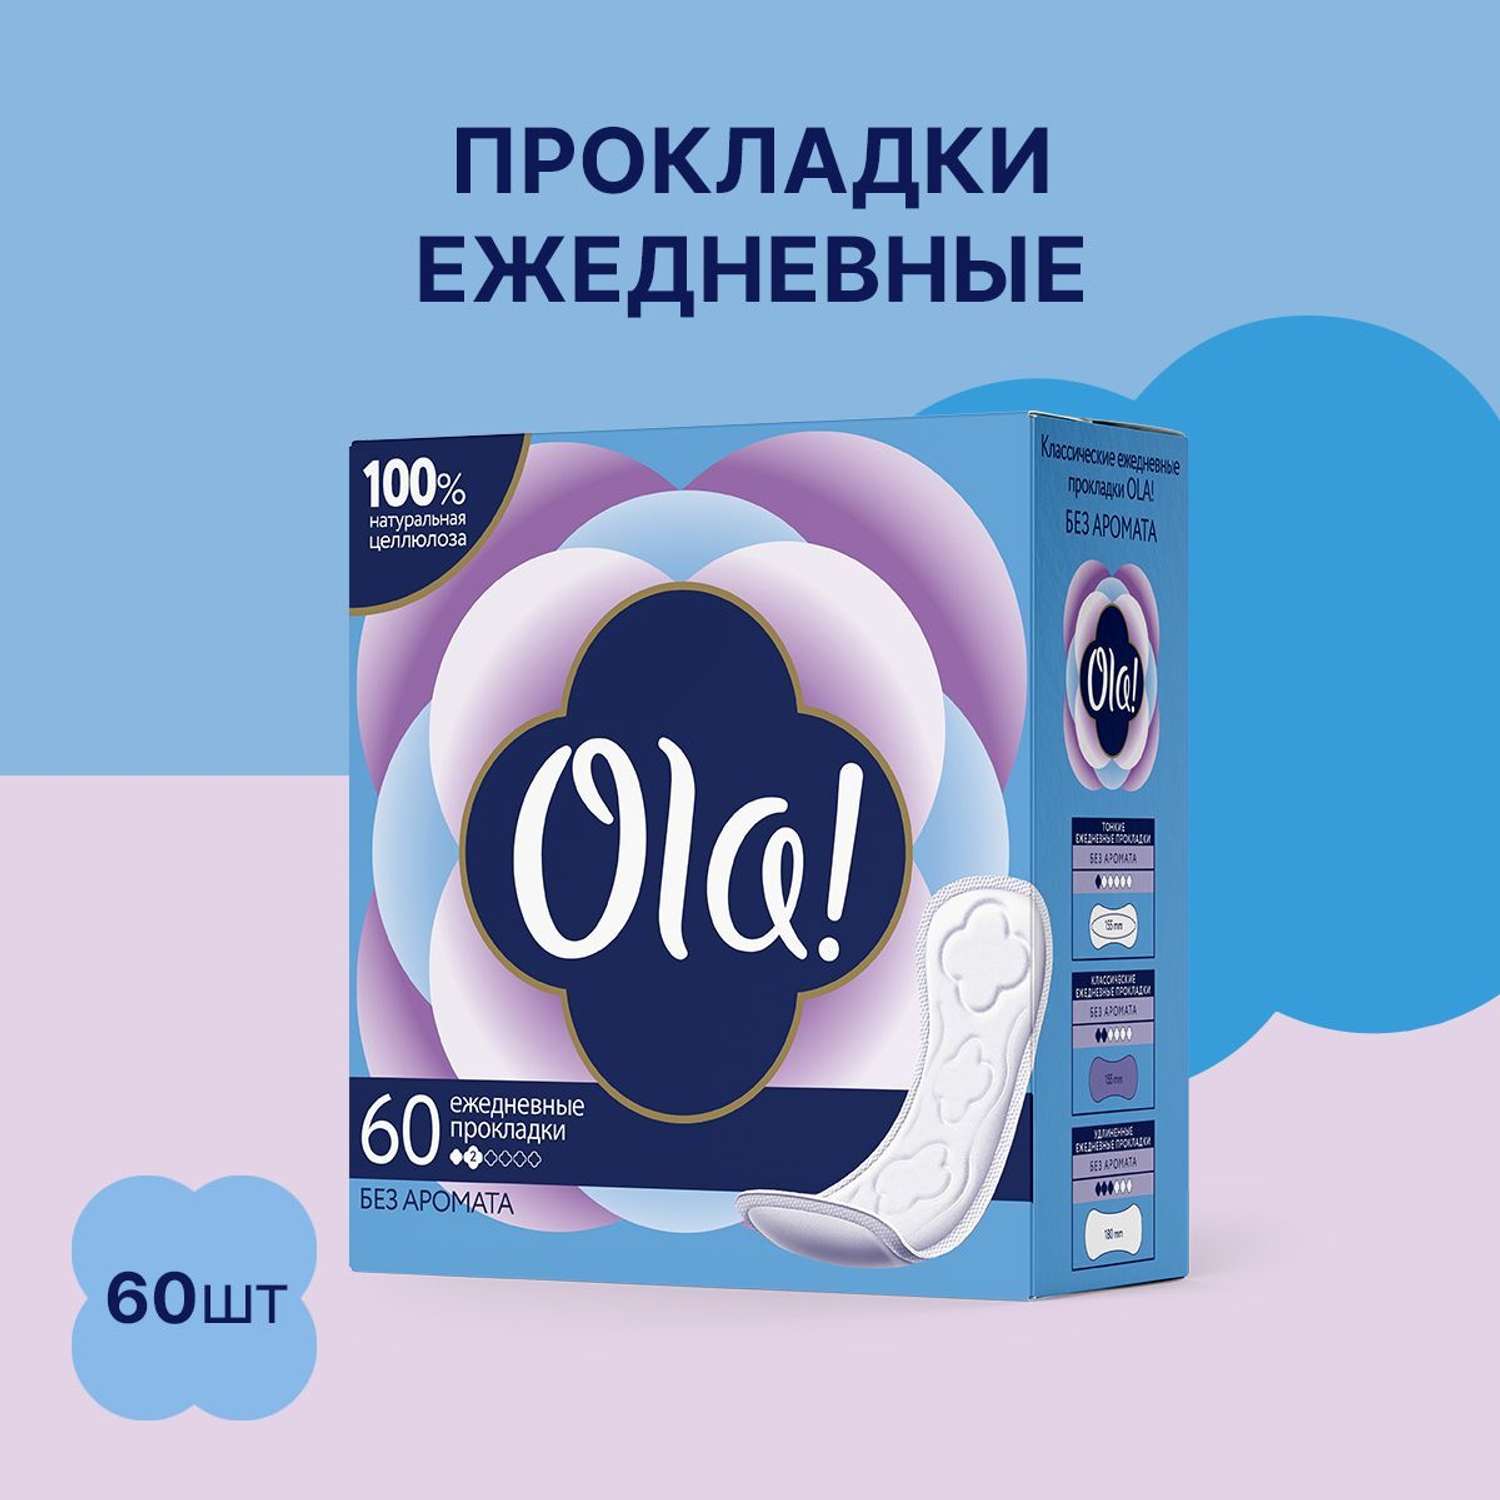 Ежедневные прокладки Ola! мягкие без аромата 60 шт - фото 2